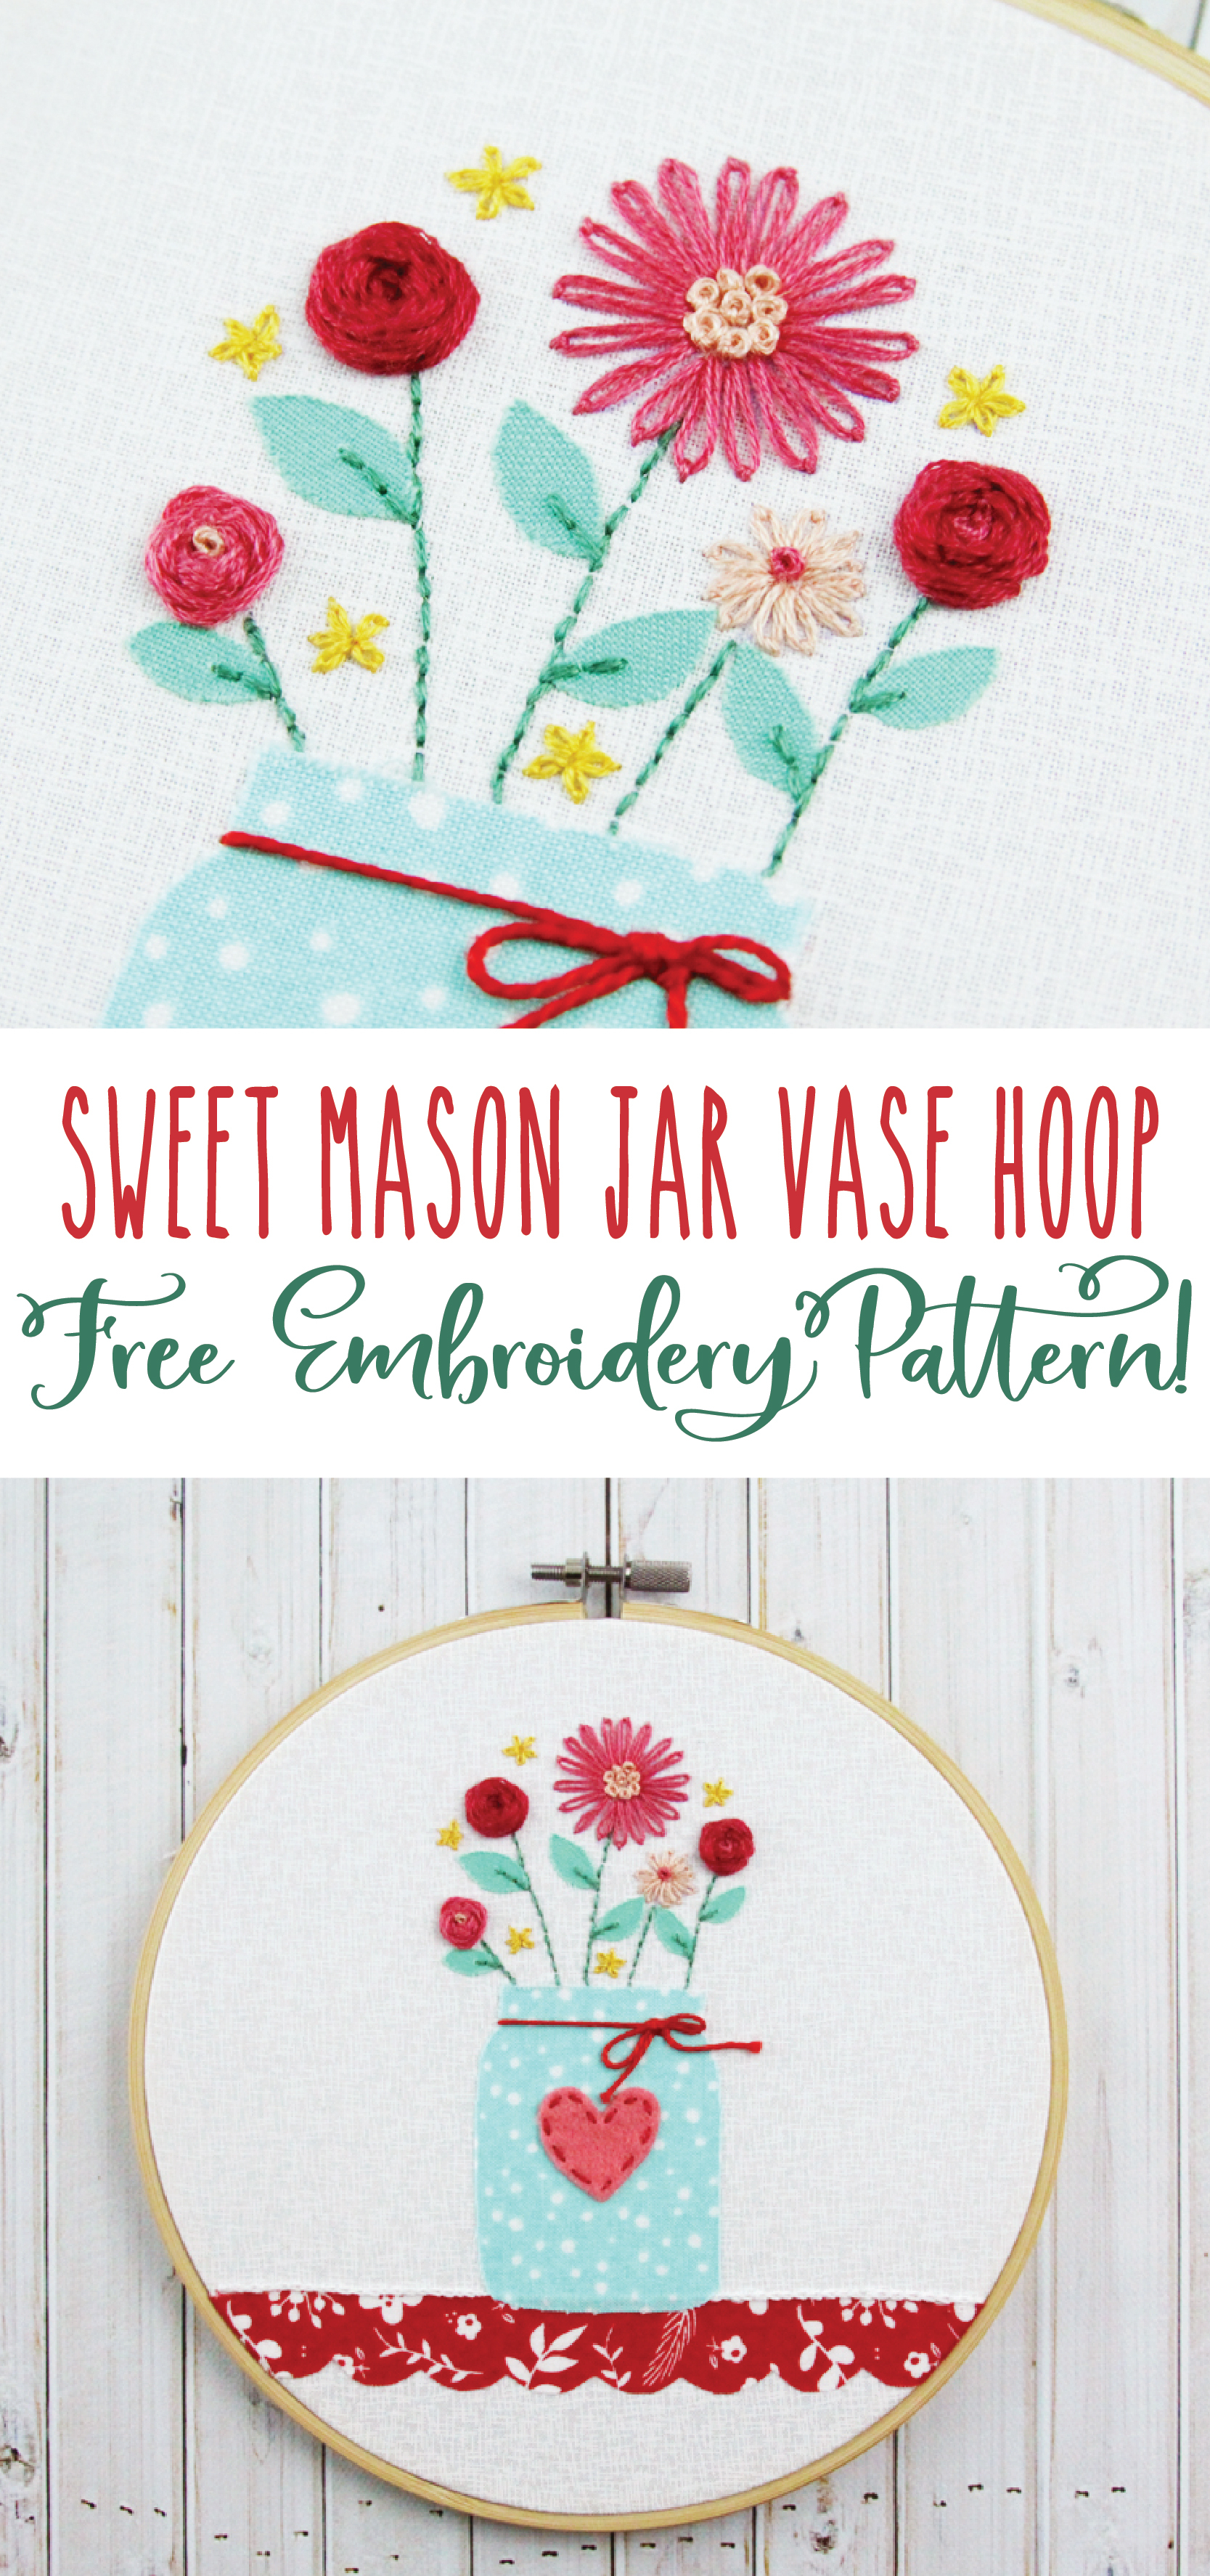 Paper Embroidery Patterns Free Sweet Mason Jar Vase Hoop Free Embroidery Pattern